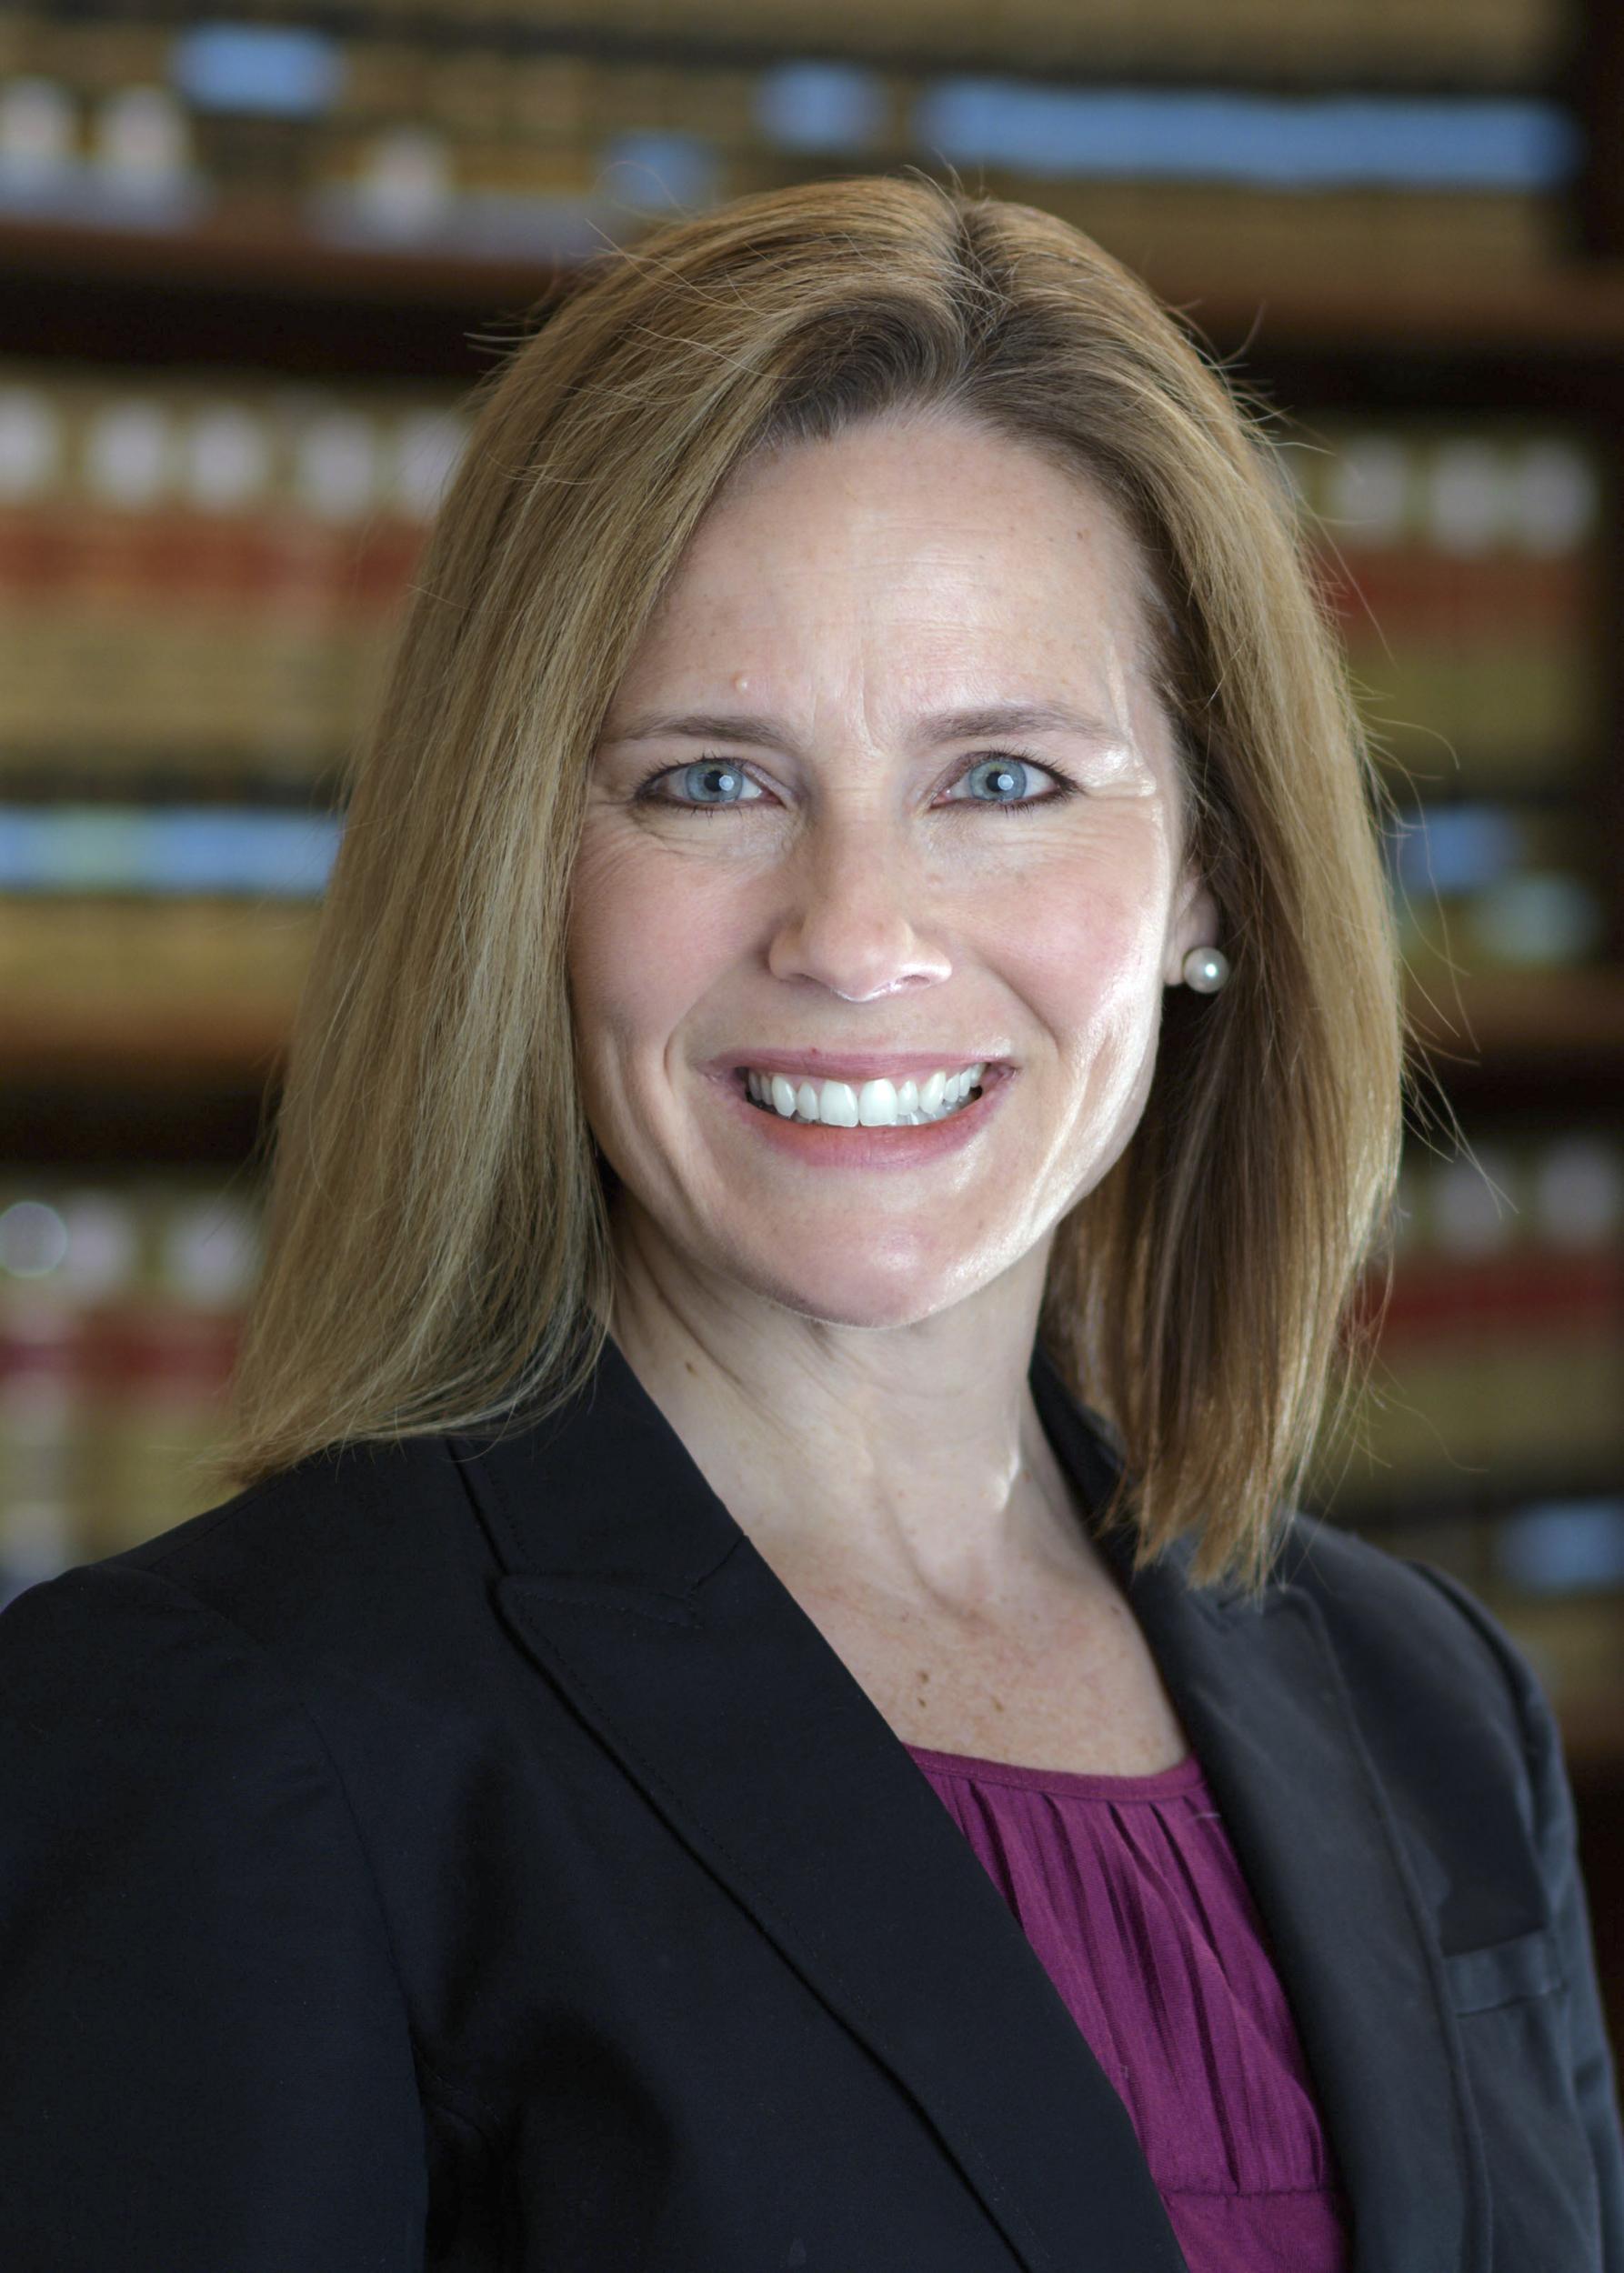 Judge Amy Coney Barrett is one of Mr Trump's top Supreme Court contenders